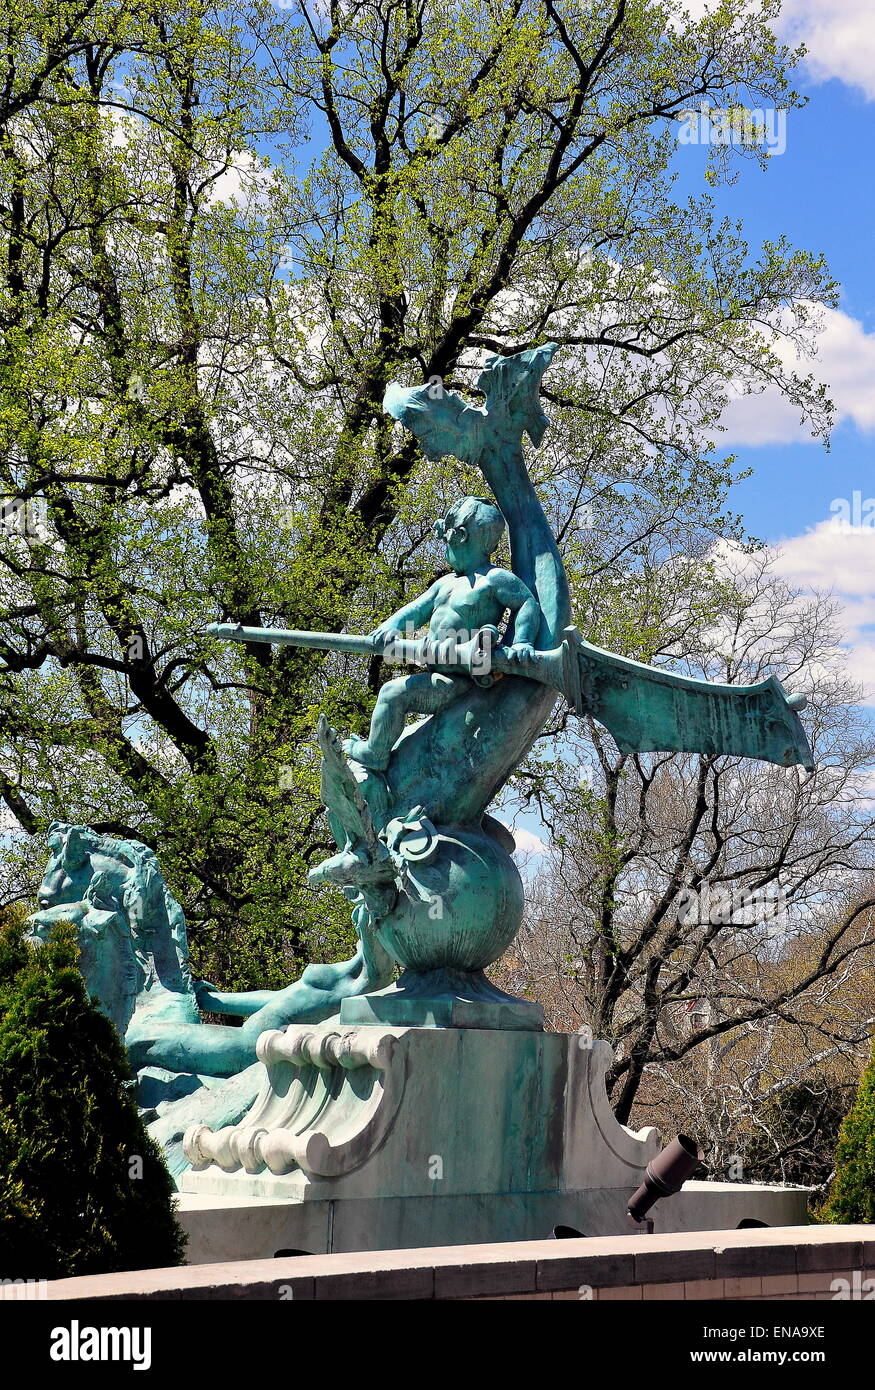 Bronx, New York: Beaux Arts fontana nella parte anteriore del LuEsther Mertz biblioteca di ricerca a New York al Giardino Botanico * Foto Stock